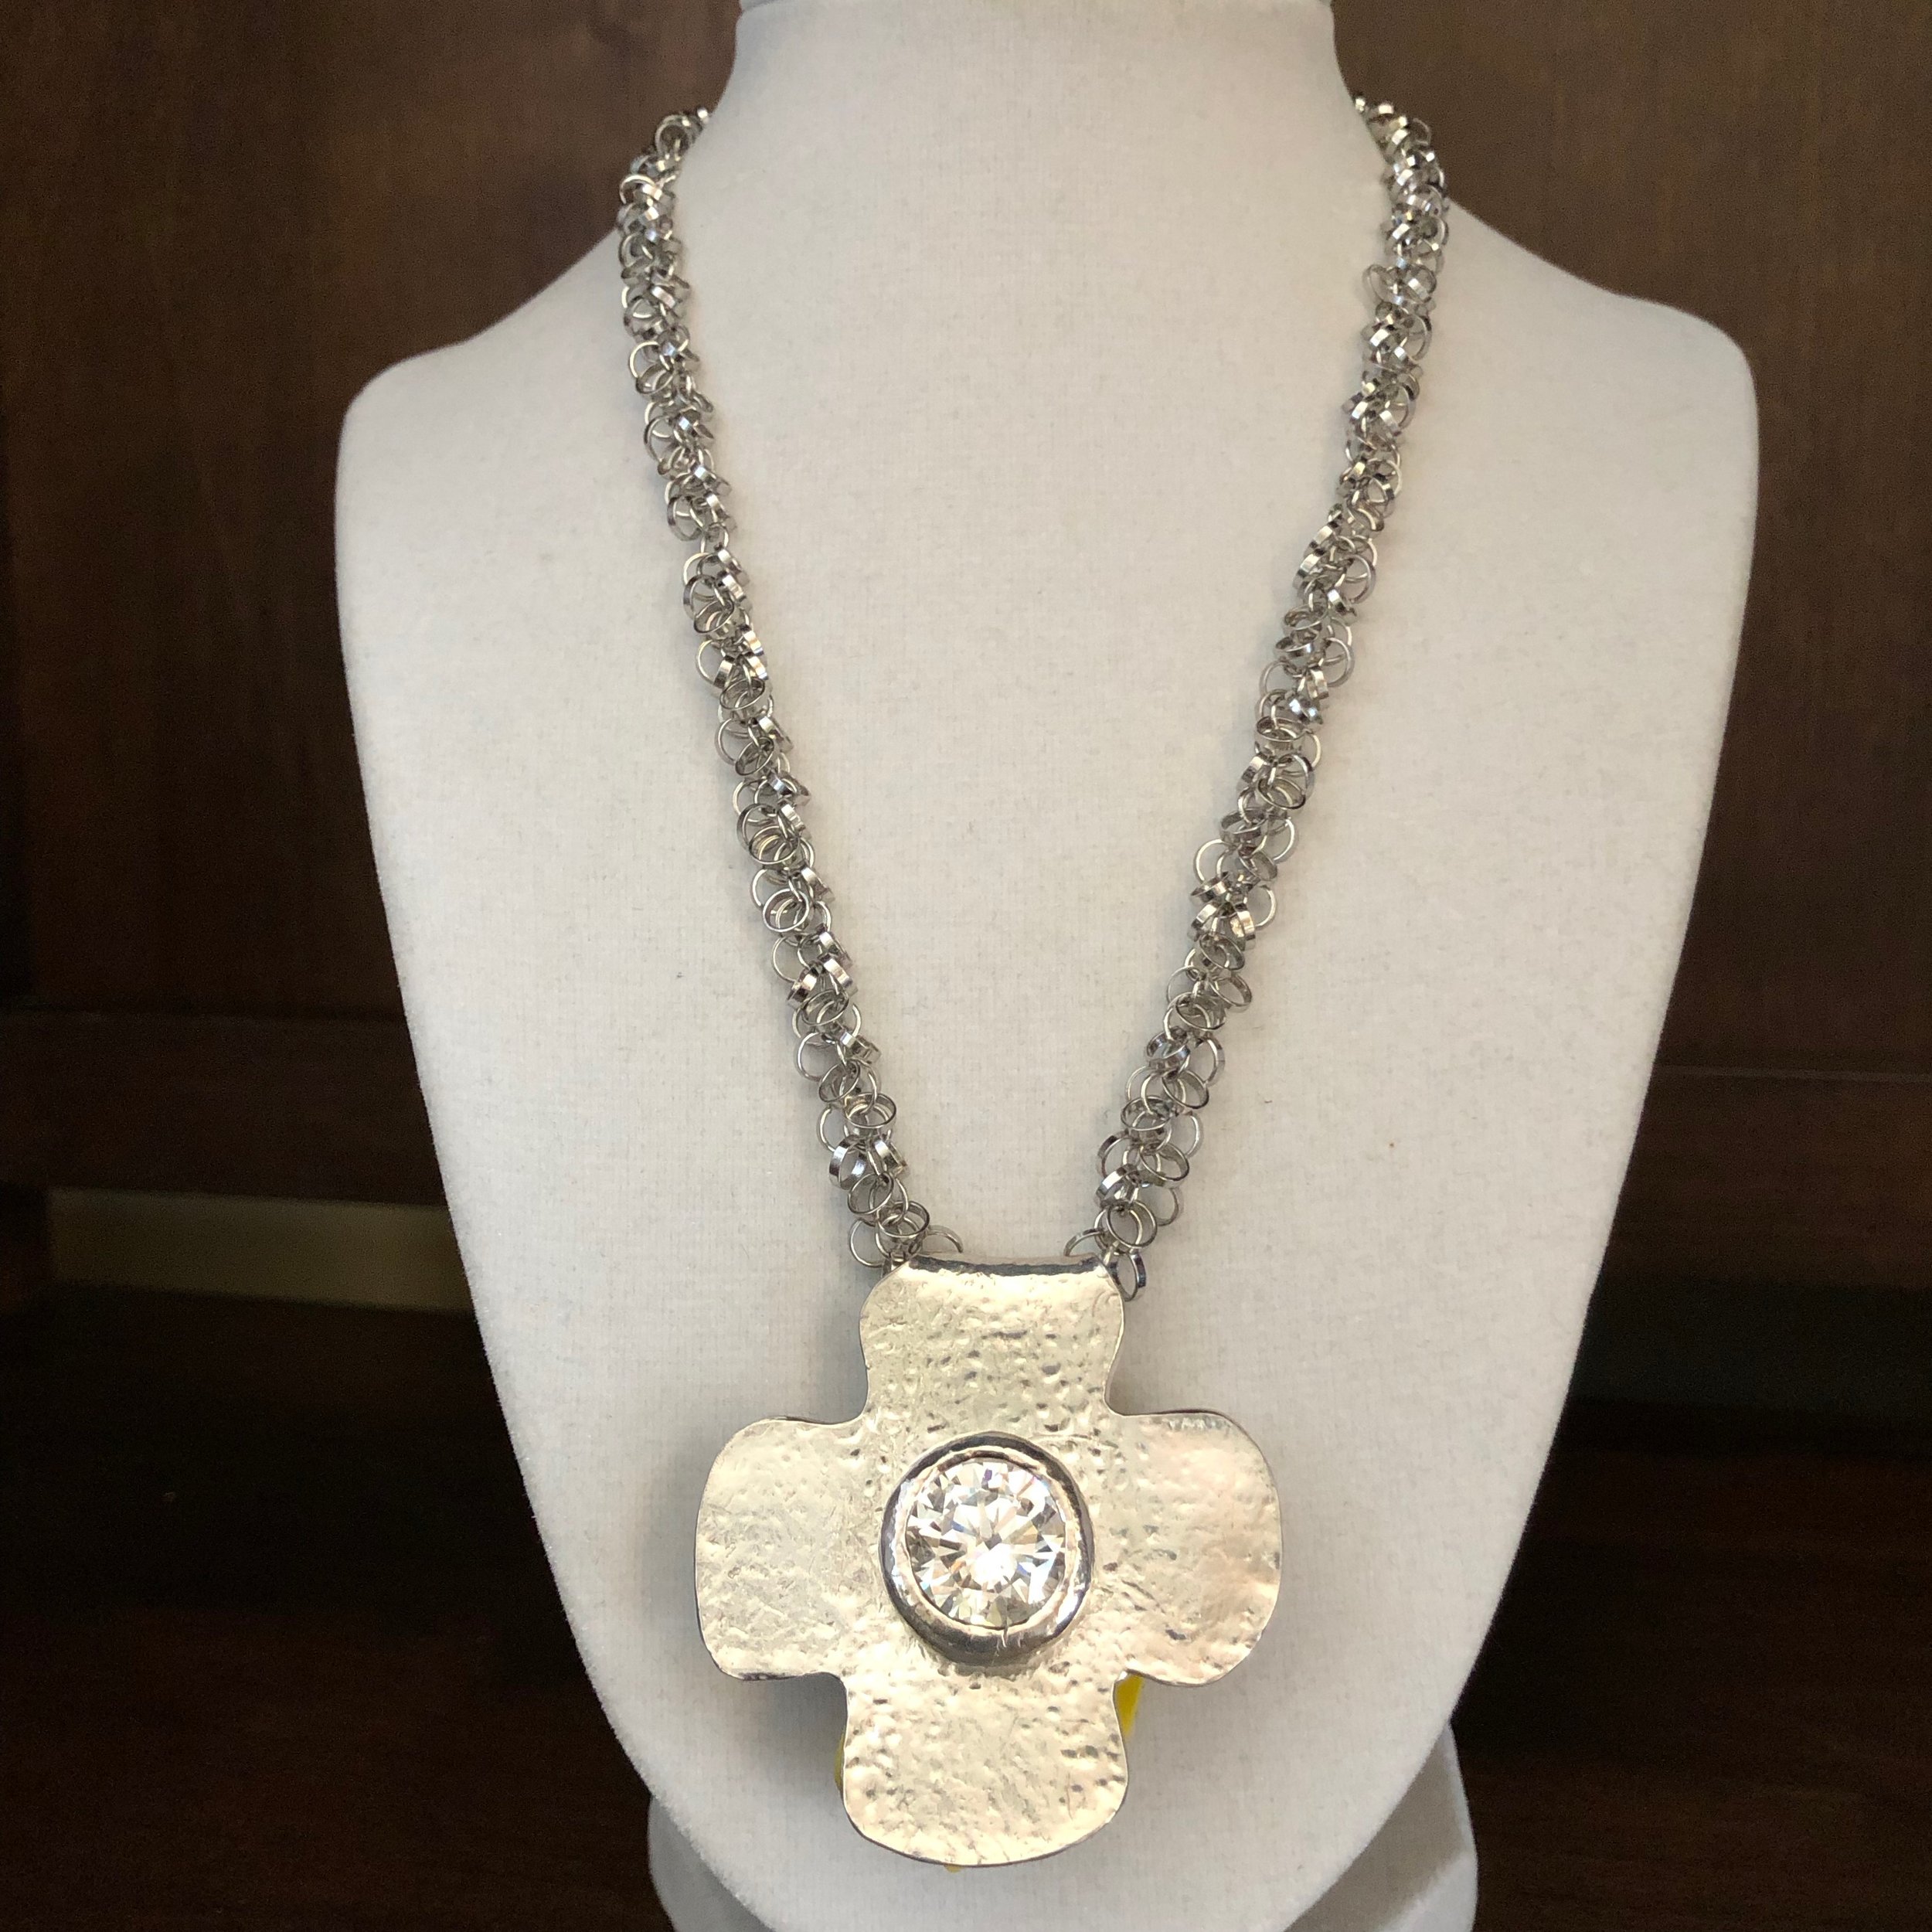 Hammered cross pendant necklace with bezel set crystal | melindakdesigns